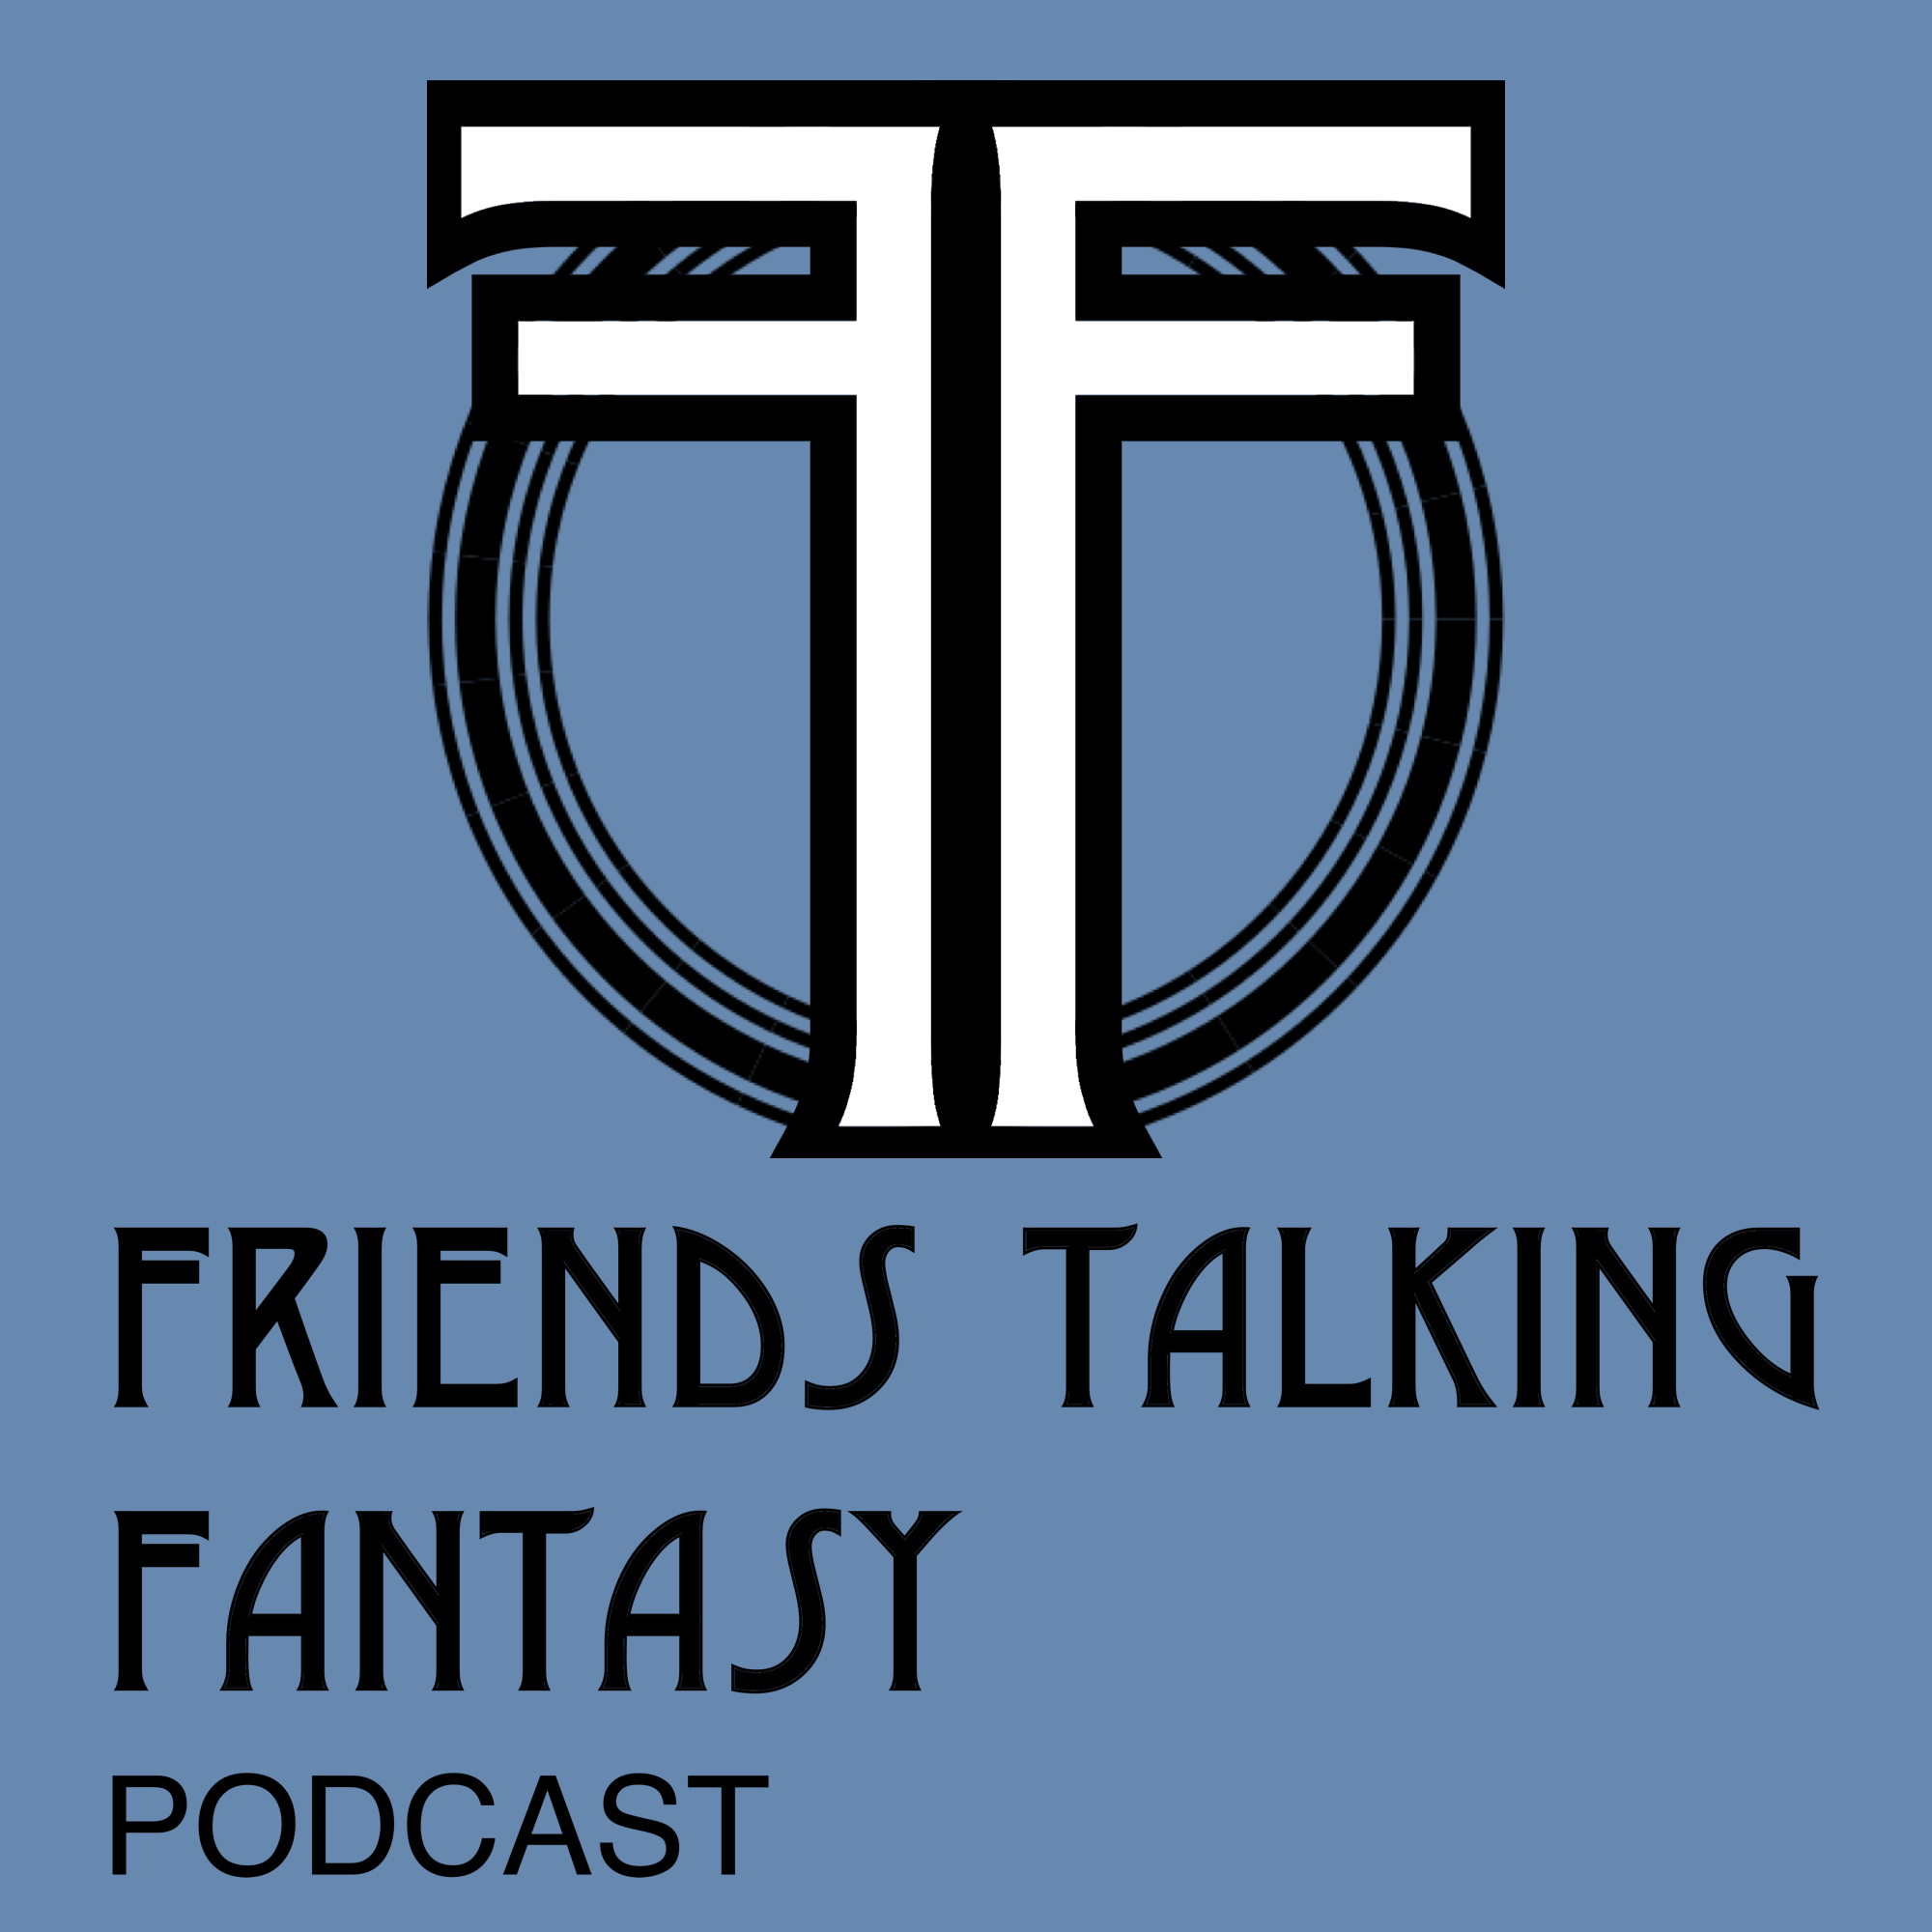 Friends Talking Fantasy Podcast